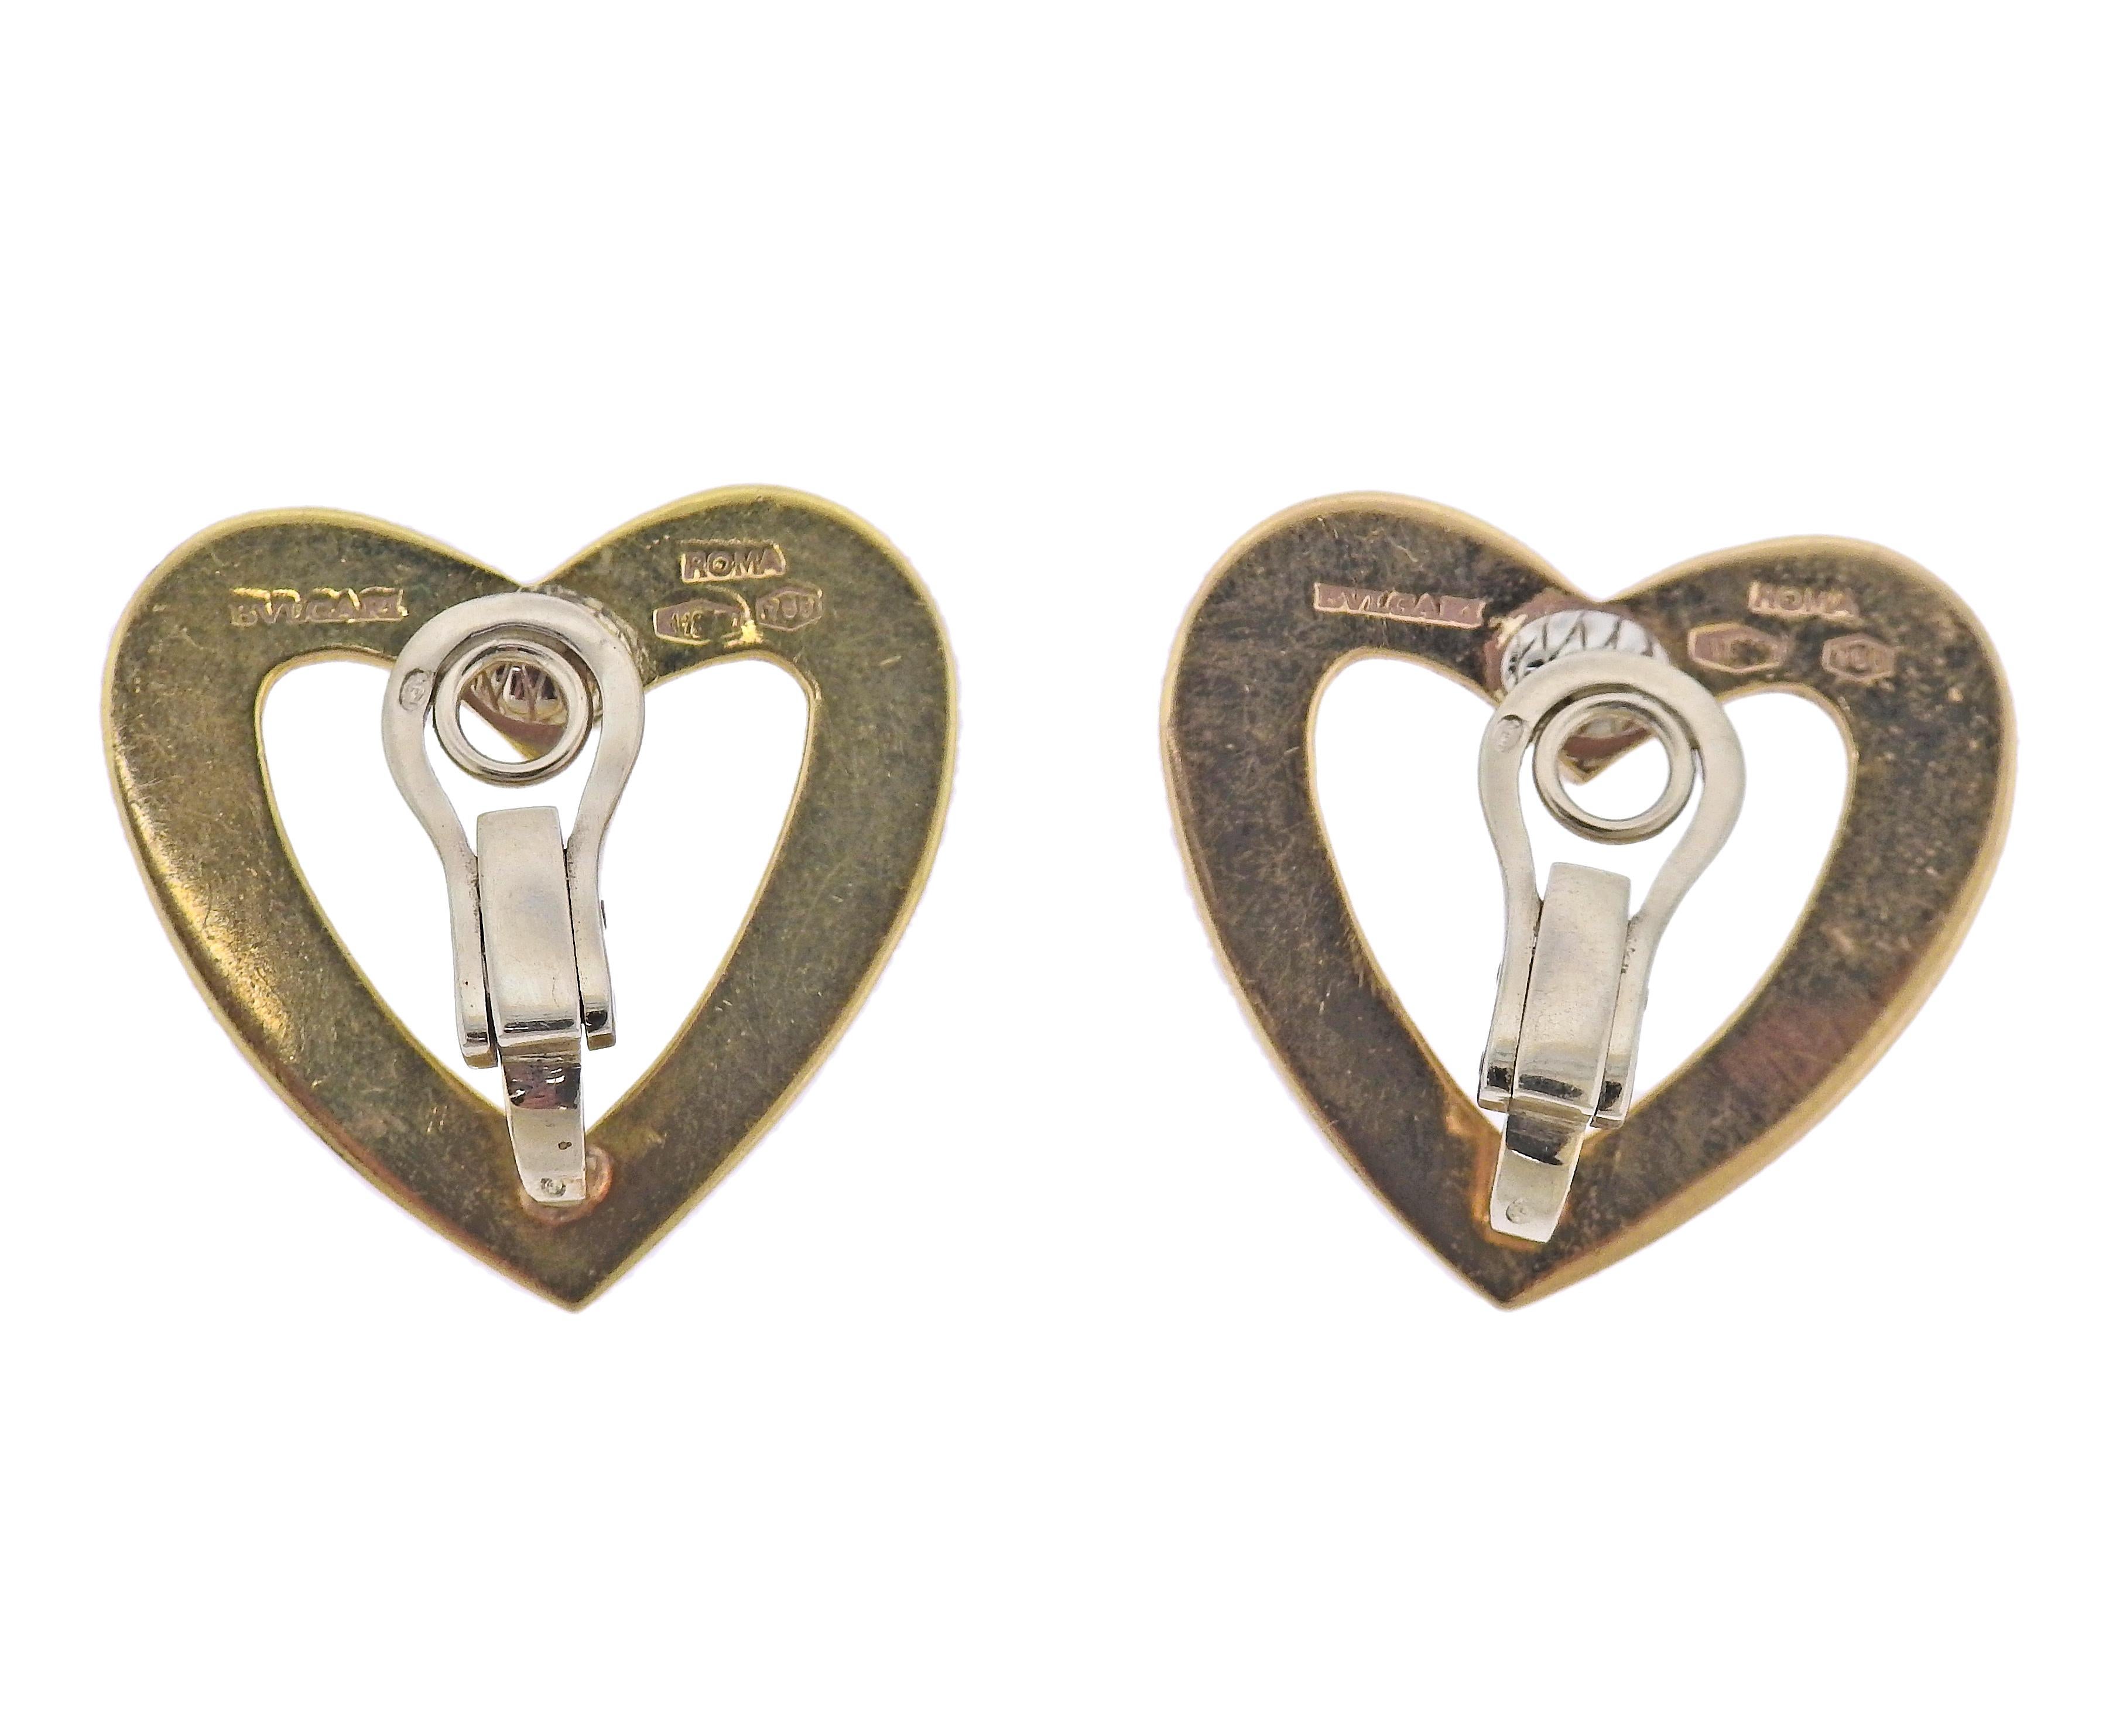 Pair of 18k gold open heart earrings by Bvlgari. Earrings measure 30mm x 29mm. Marked: Bvlgari, Roman, 750. Weight - 26.2 grams.